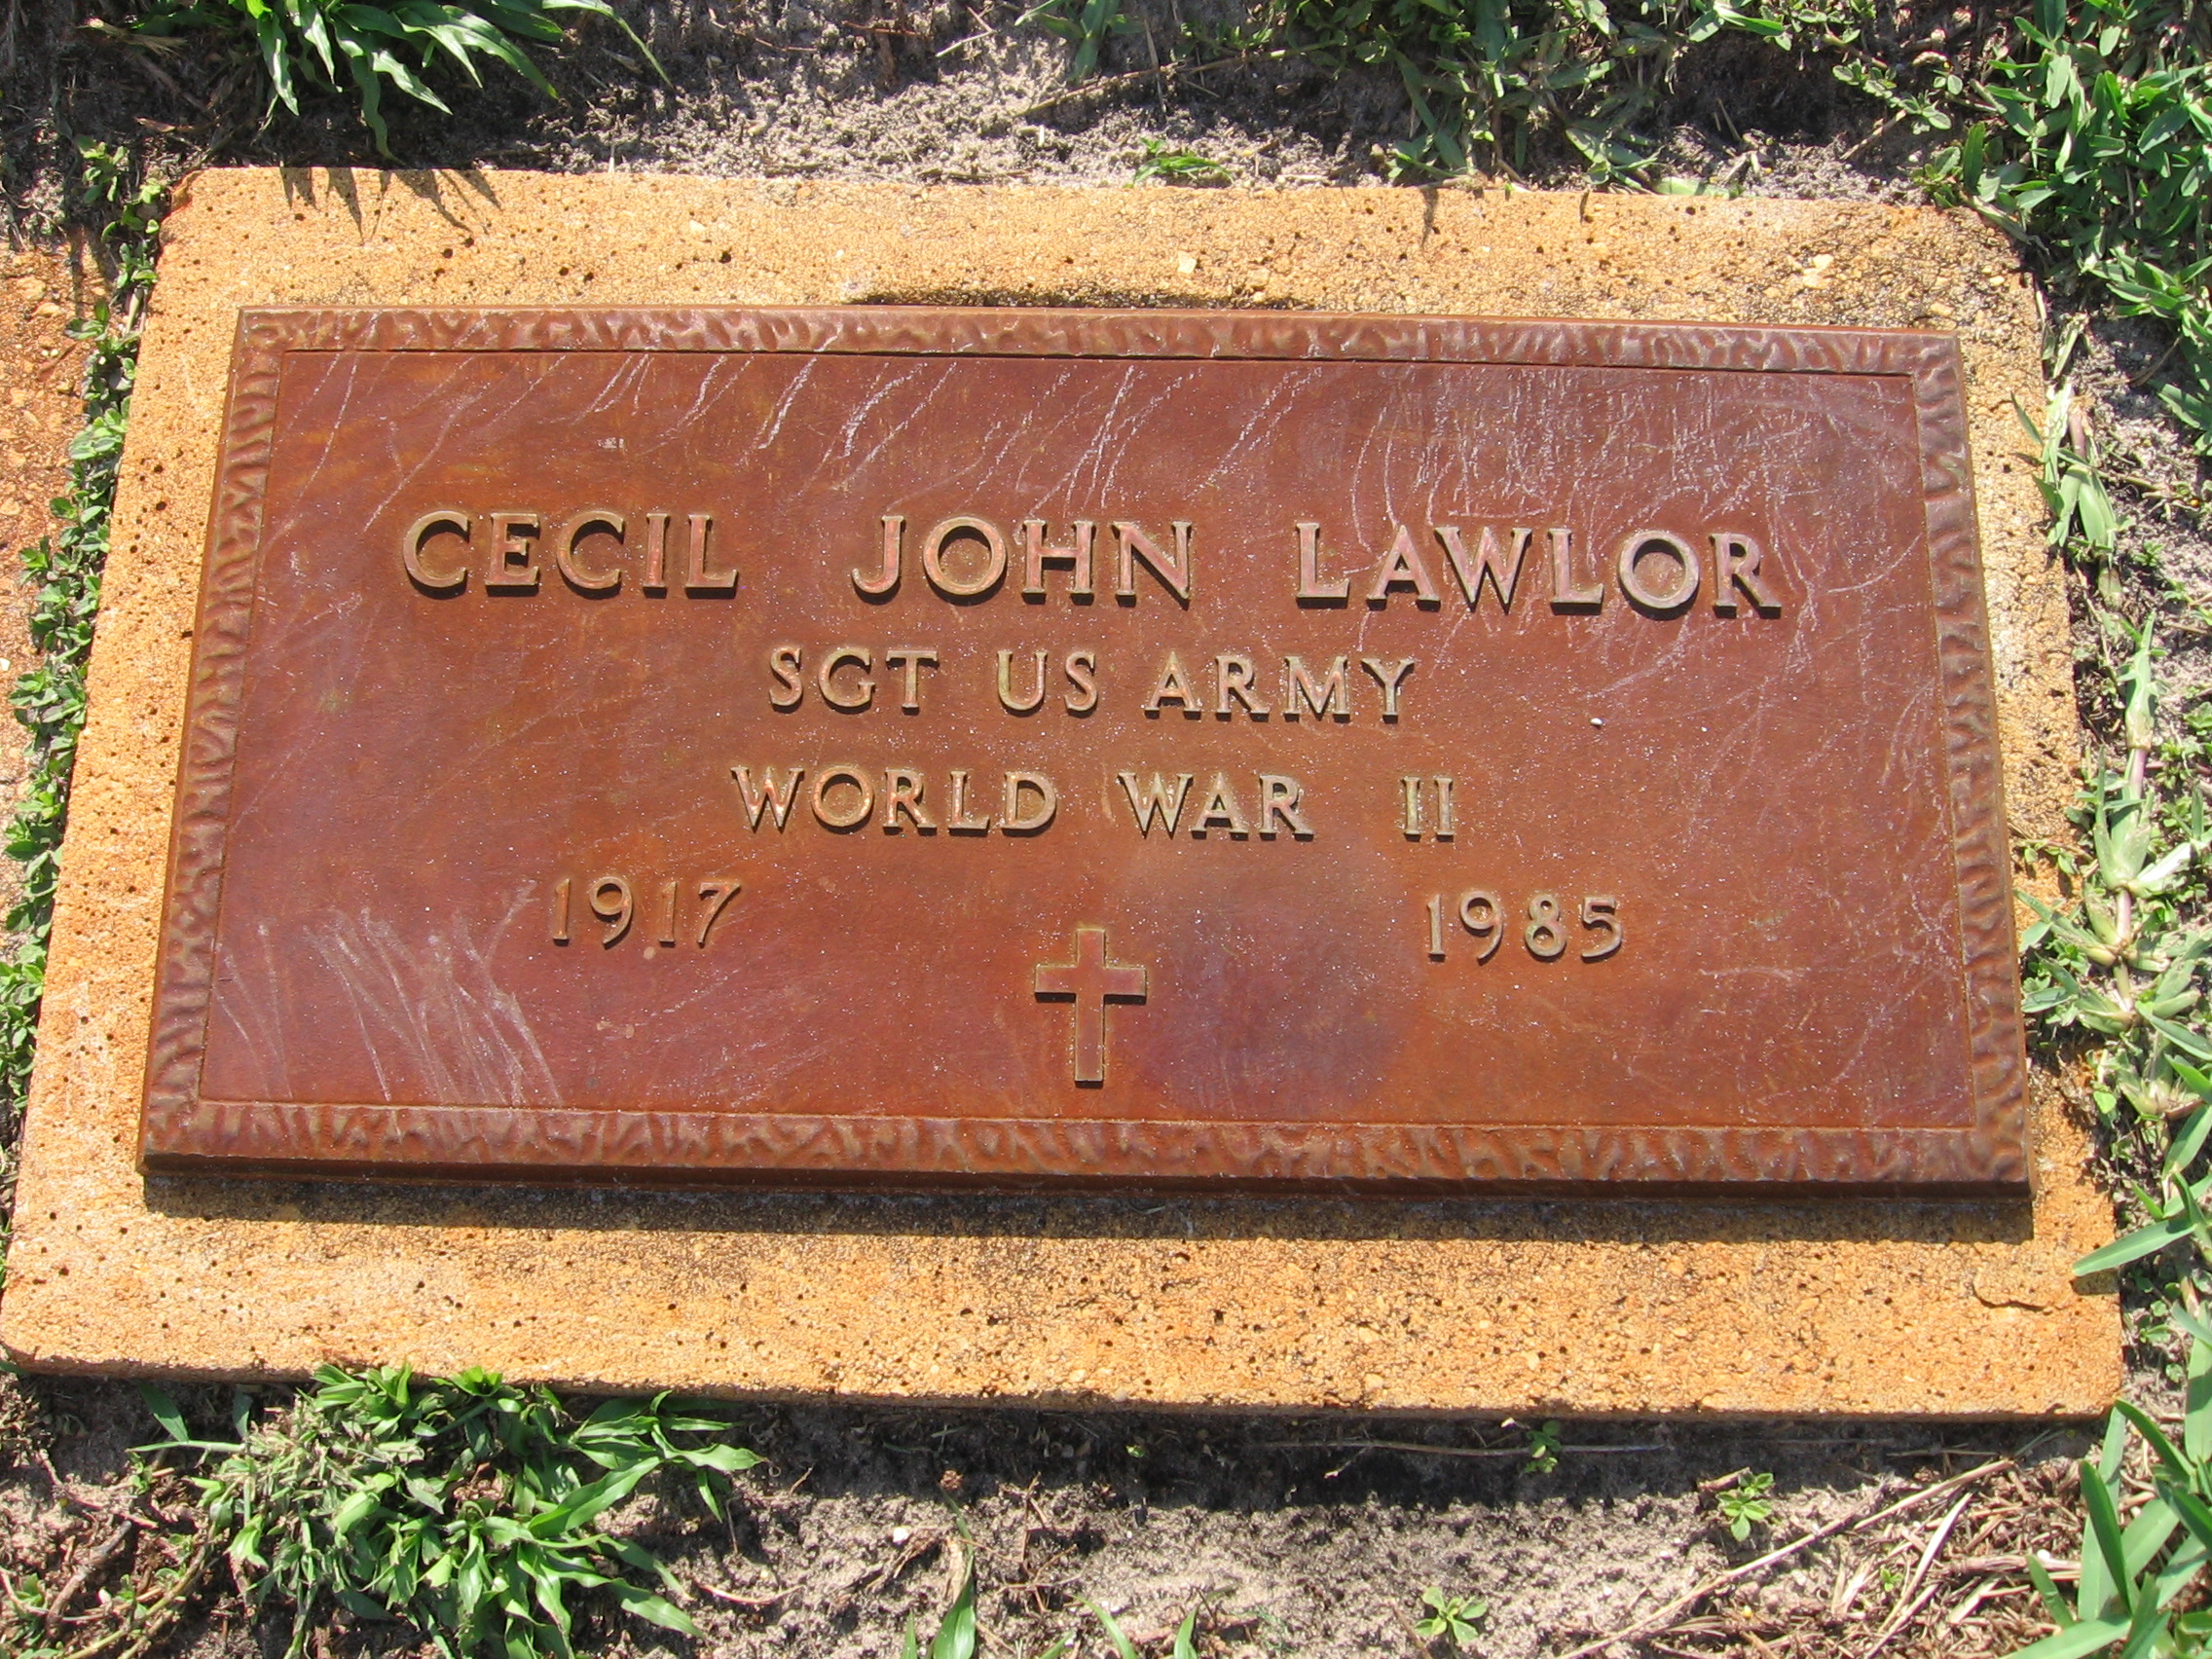 Sgt Cecil John Lawlor